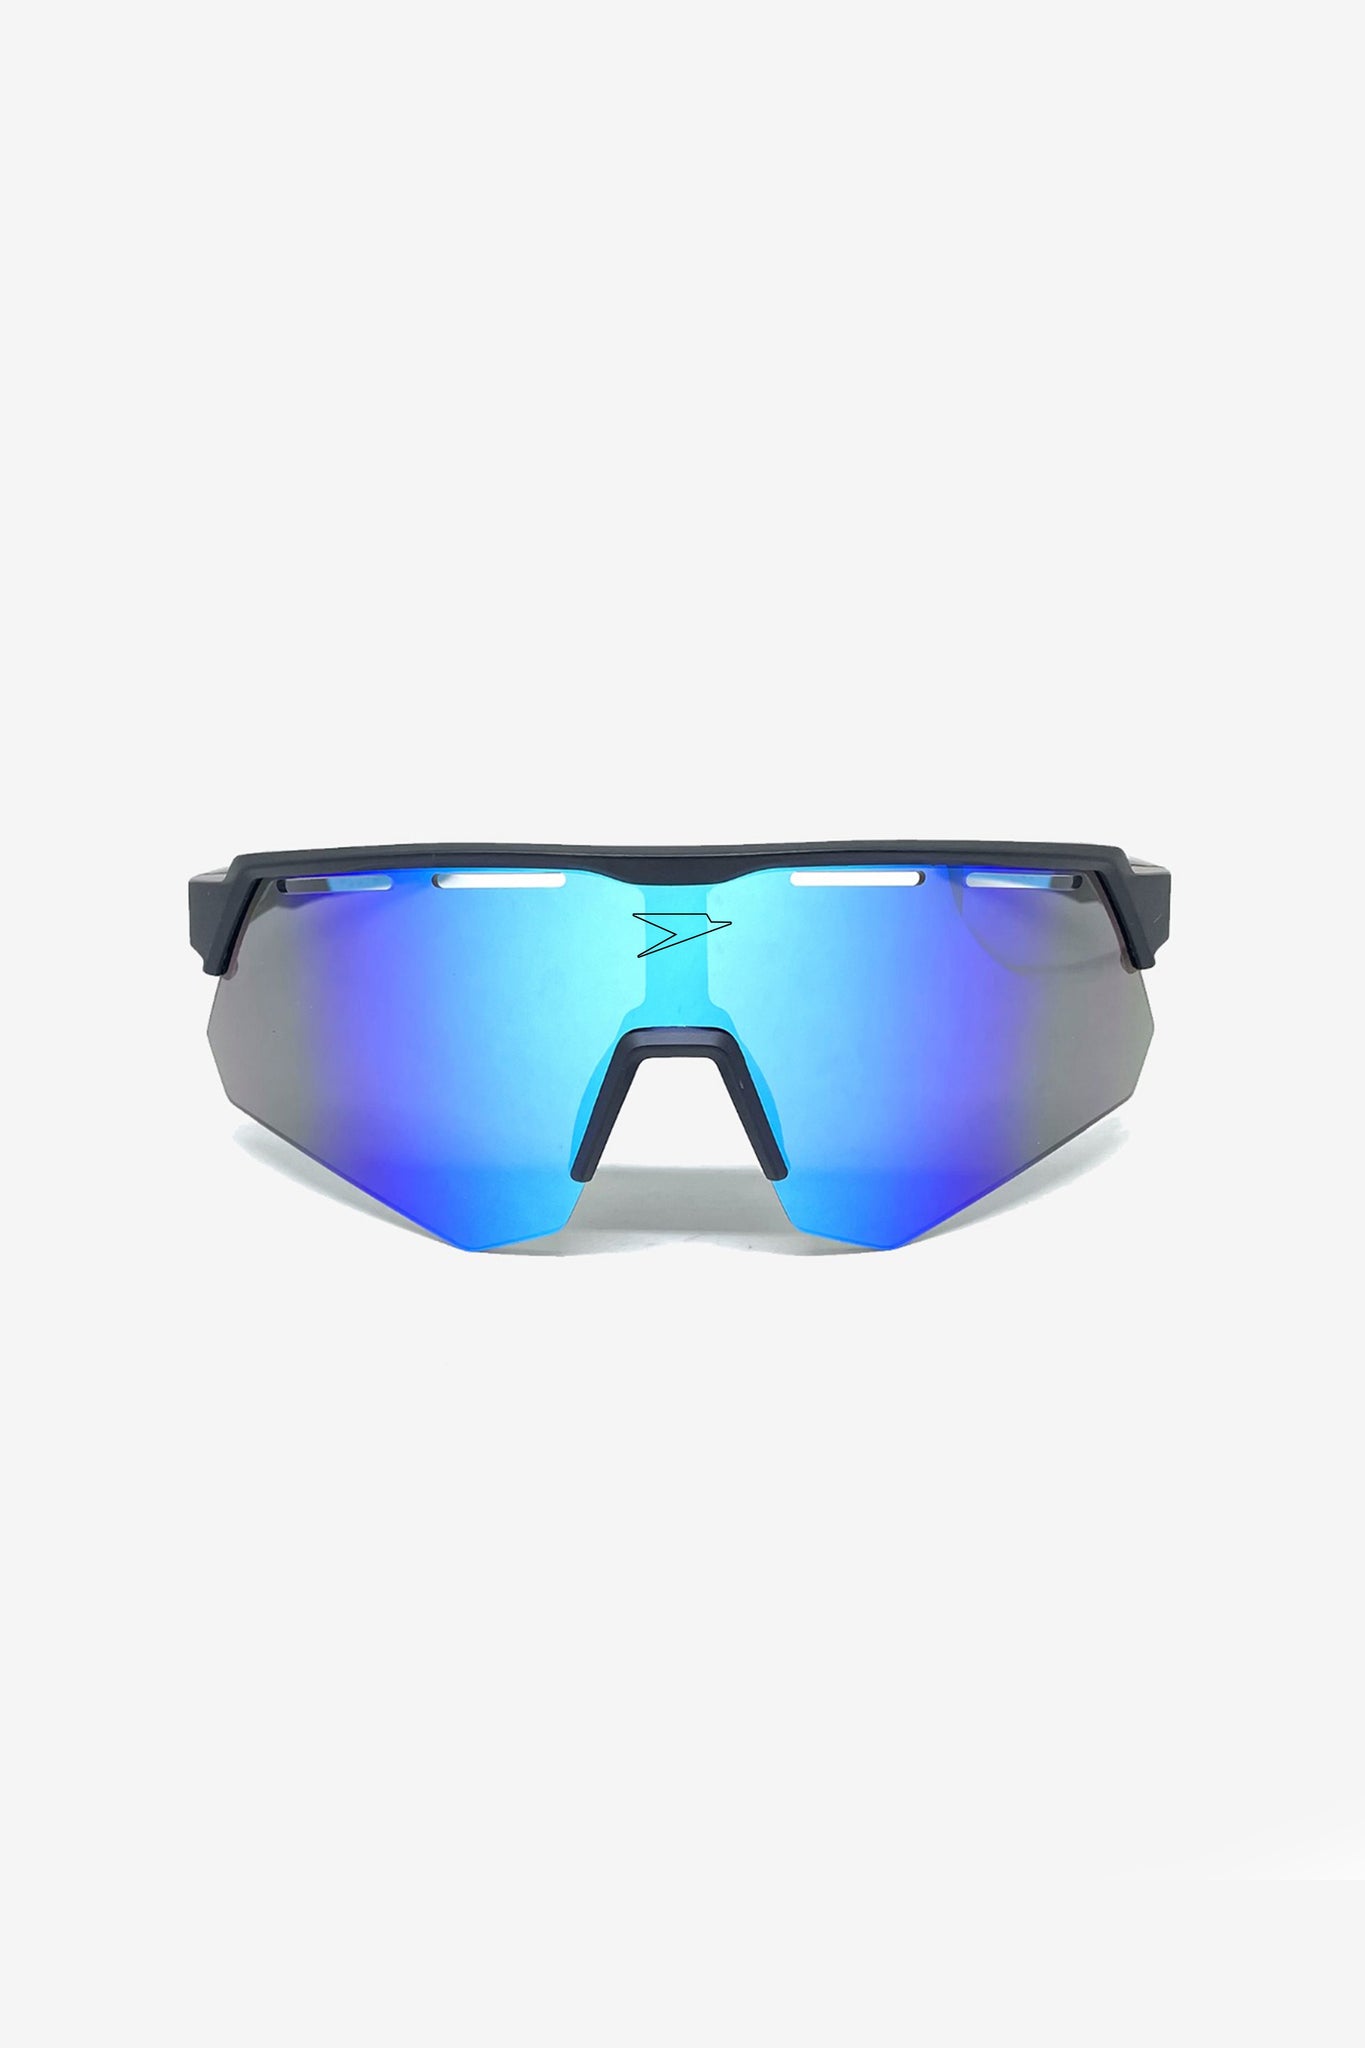 Sunglasses "RESORT" Explorer Black/Blue